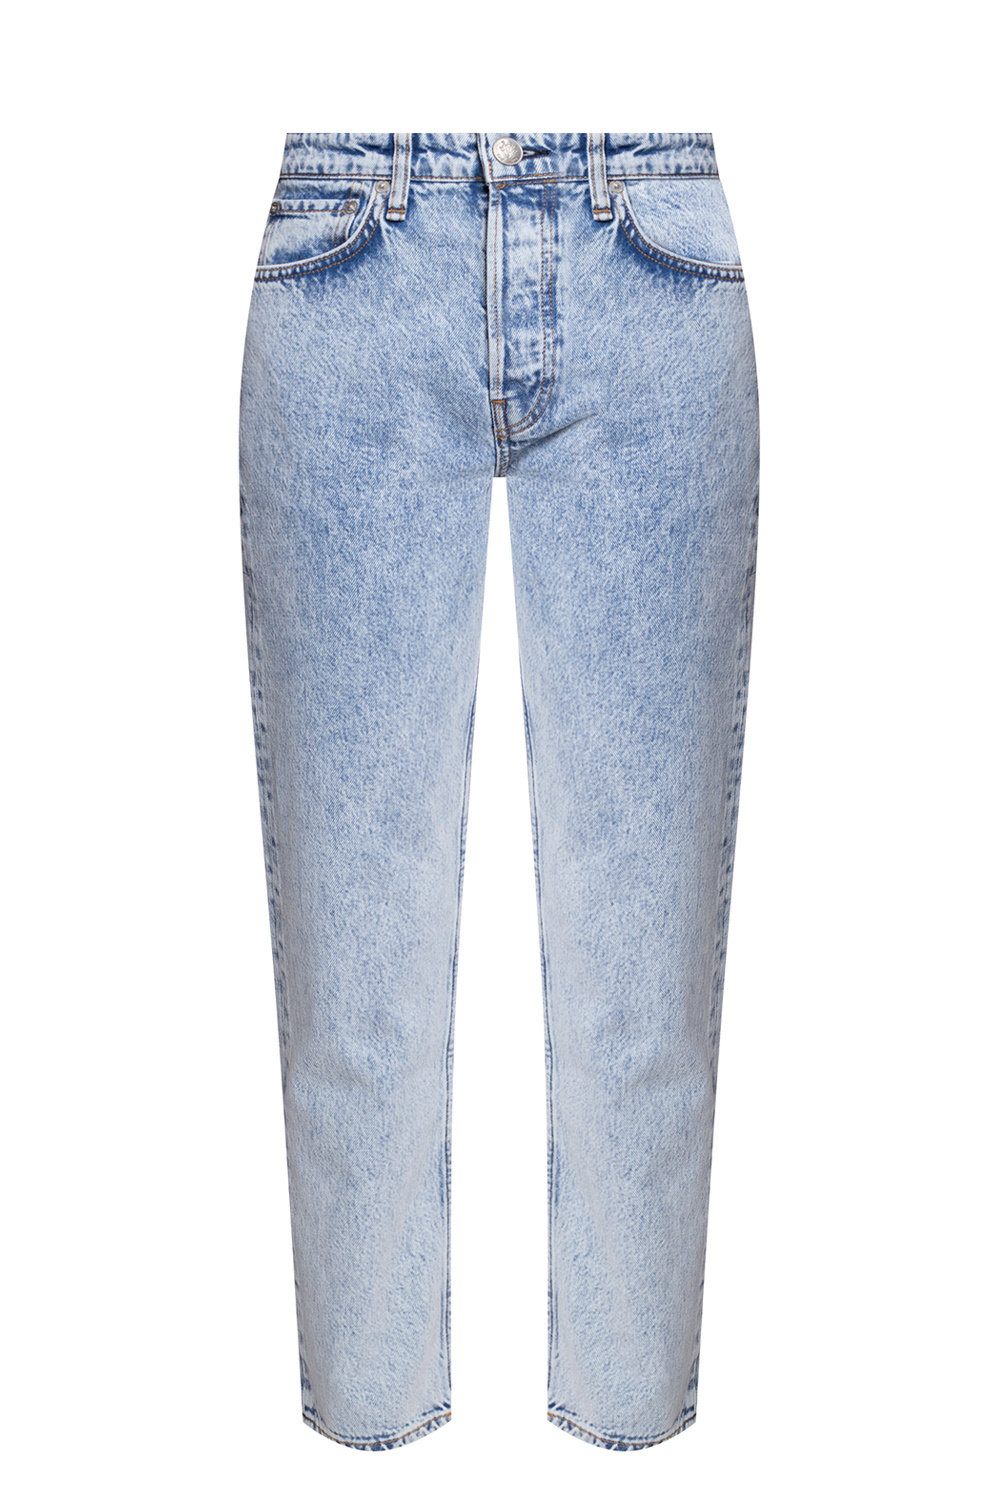 Bottega Veneta ribbed-knit maxi dress  ‘Maya’ high-waisted jeans